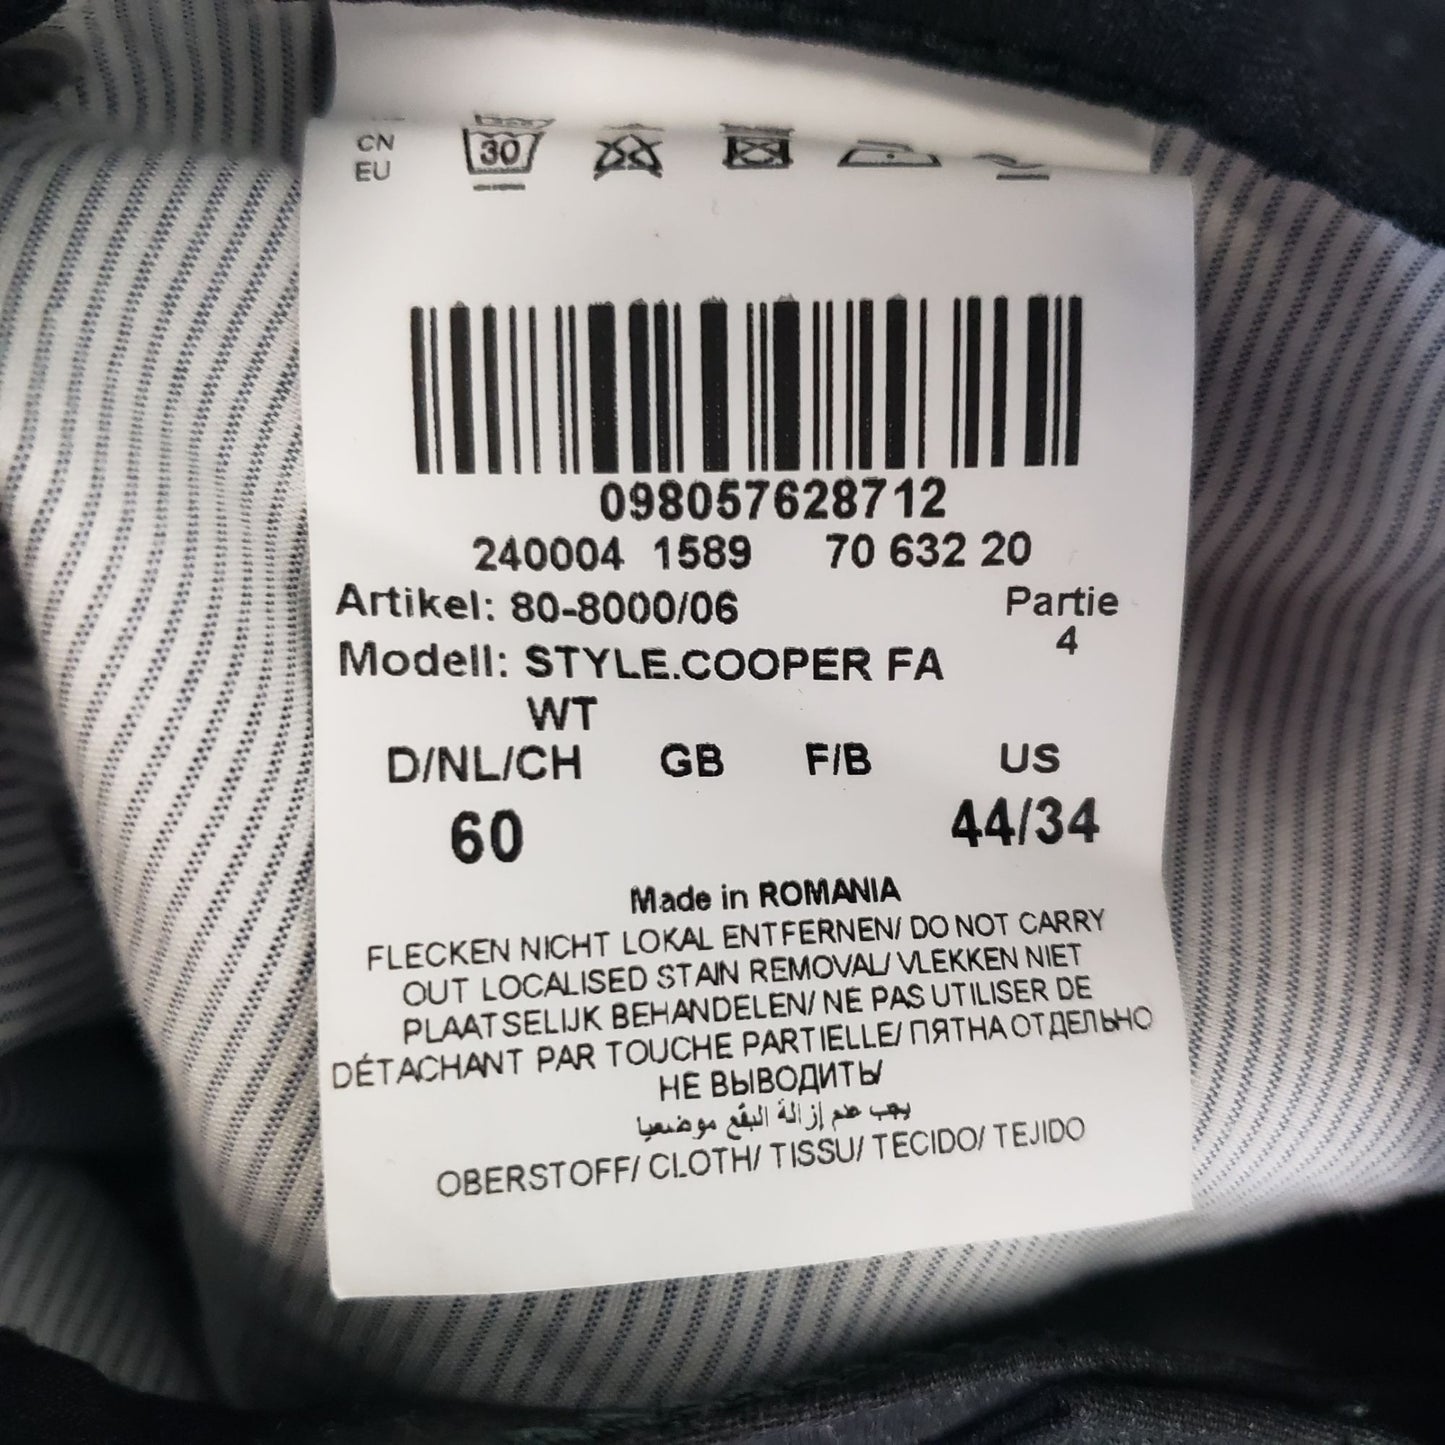 Brax Cooper Fancy Lightweight 5 Pocket Wool Blend Pants Size 44x34